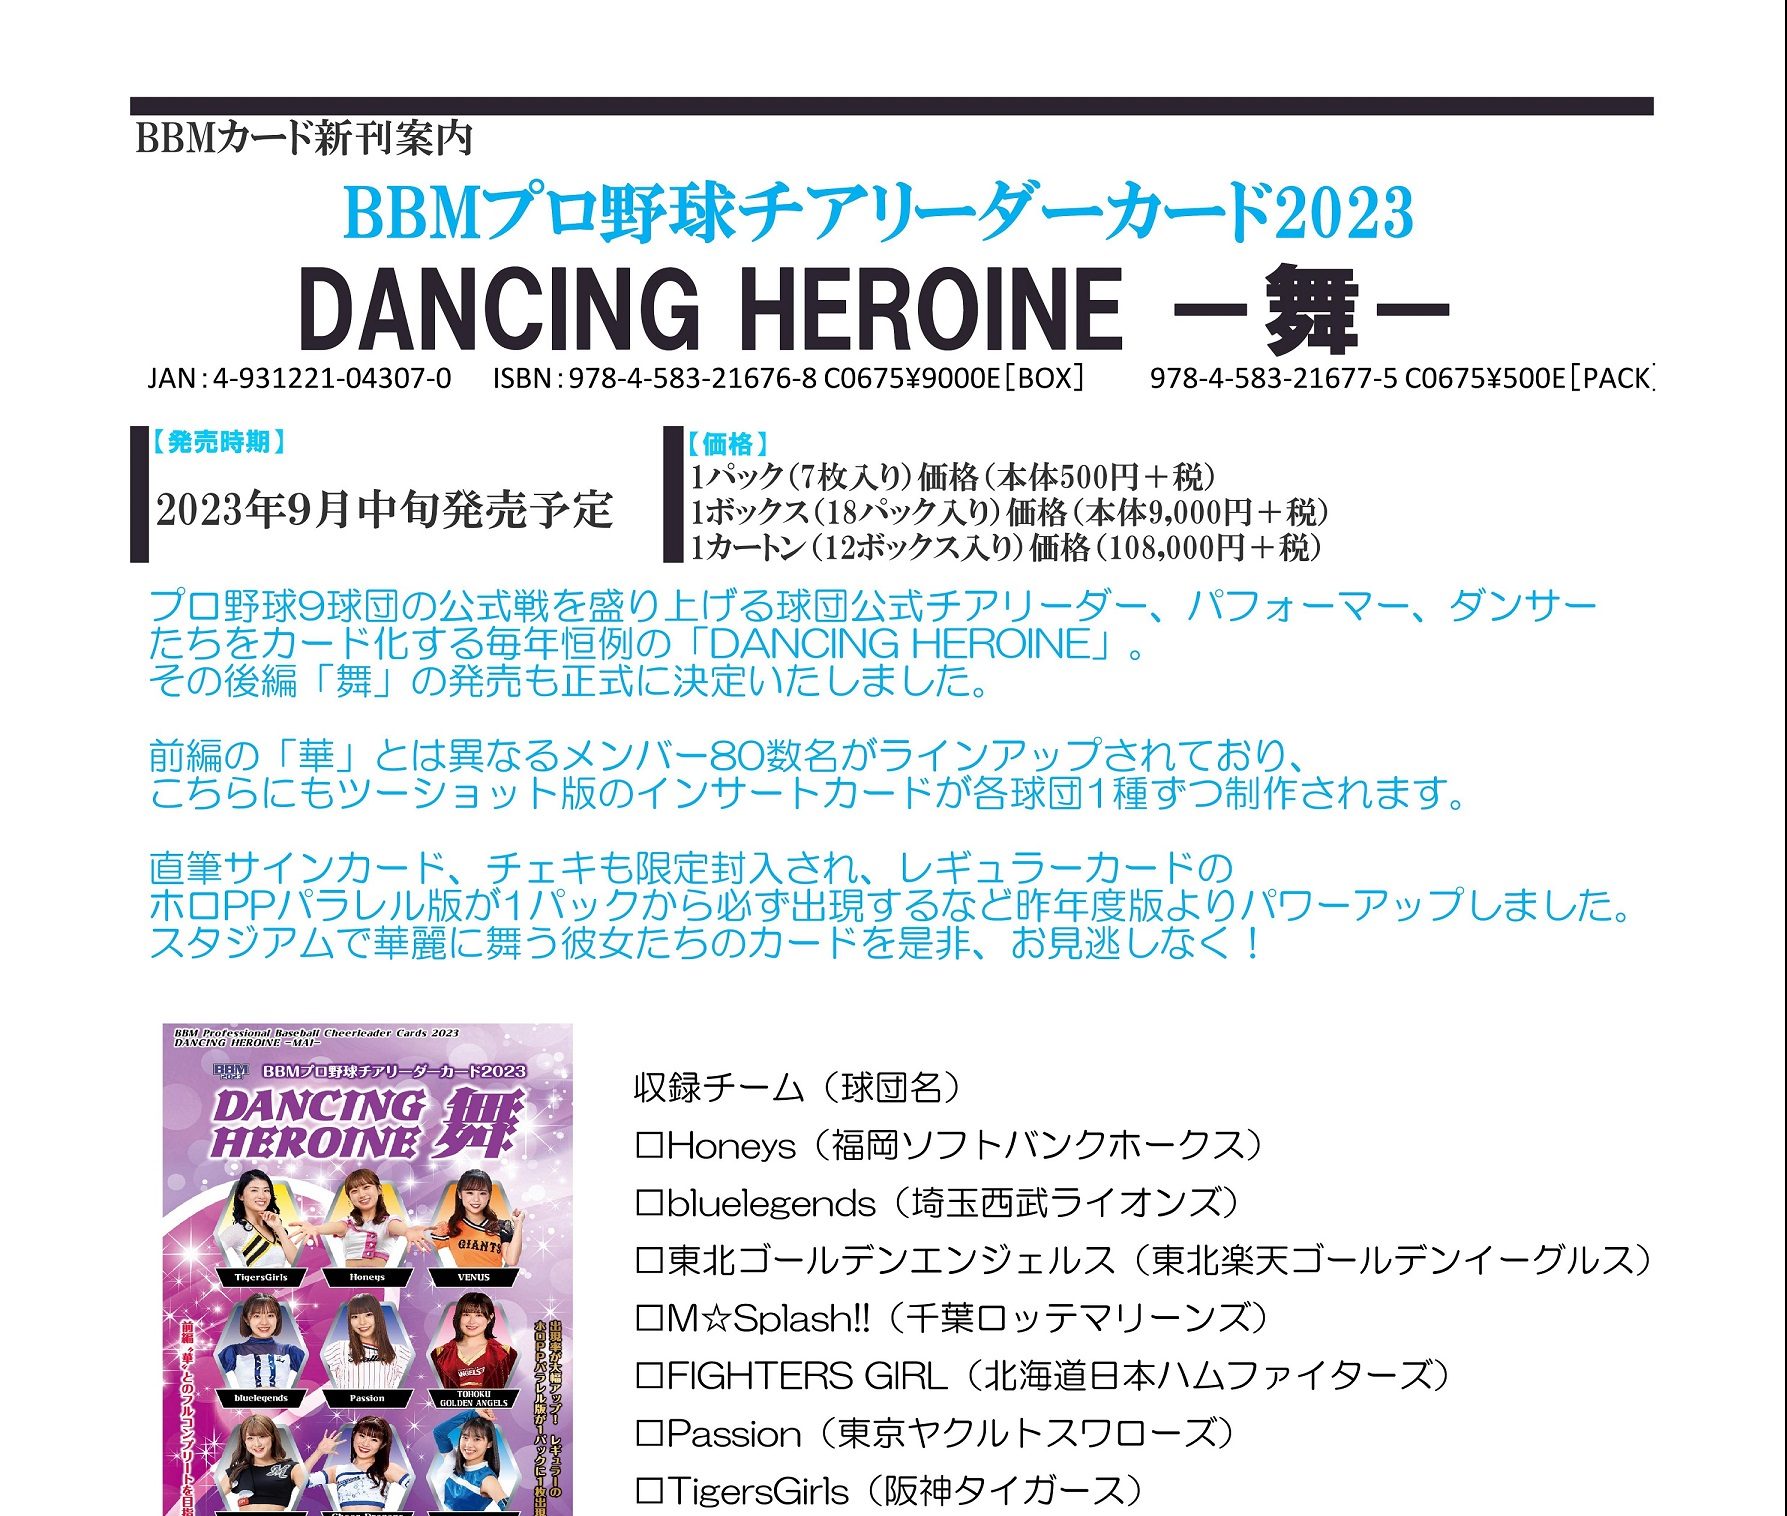 BBM プロ野球チアリーダーカード2023 DANCING HEROINE -舞- | Trading